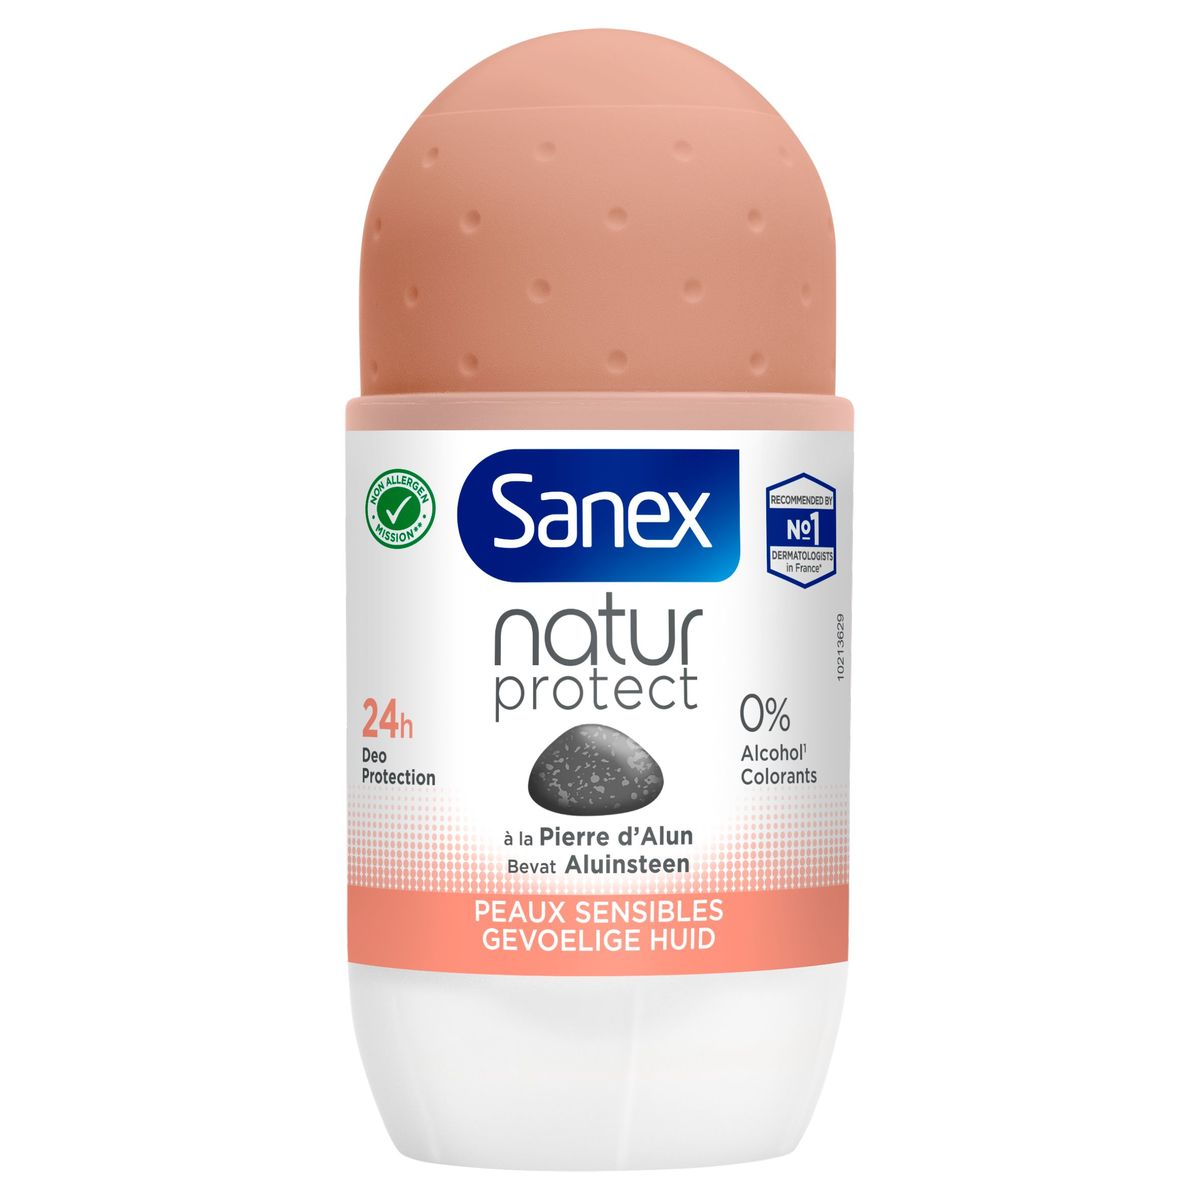 Sanex déodorant Naturprotect peaux sensibles roll 0% alcool 24h 50ml